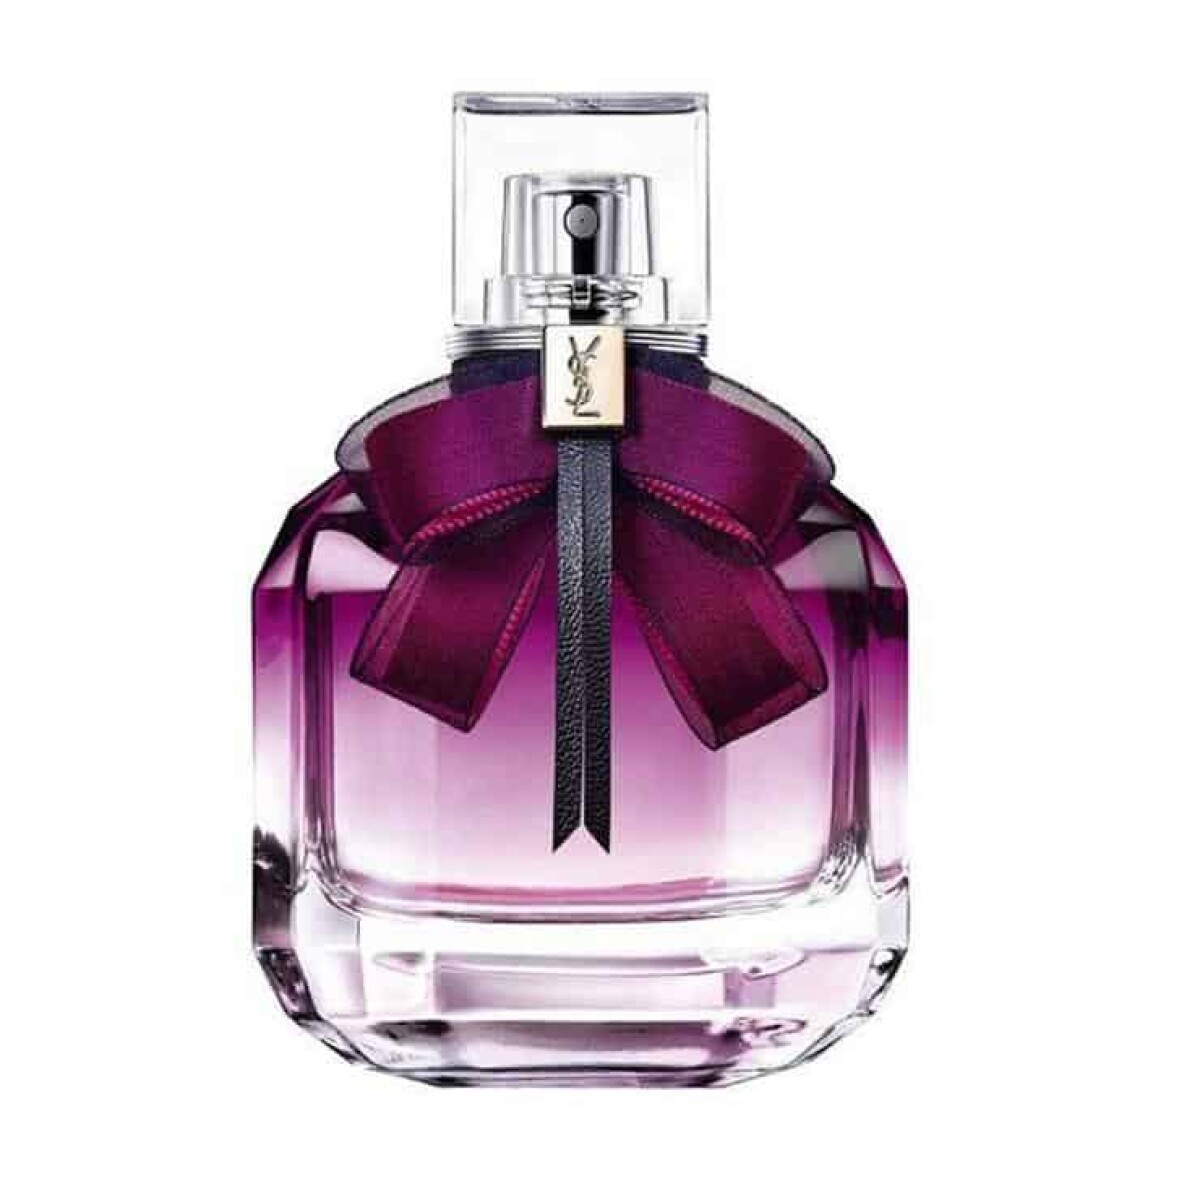 Perfume Ysl Mon Paris Intensement Edp 50 ml 